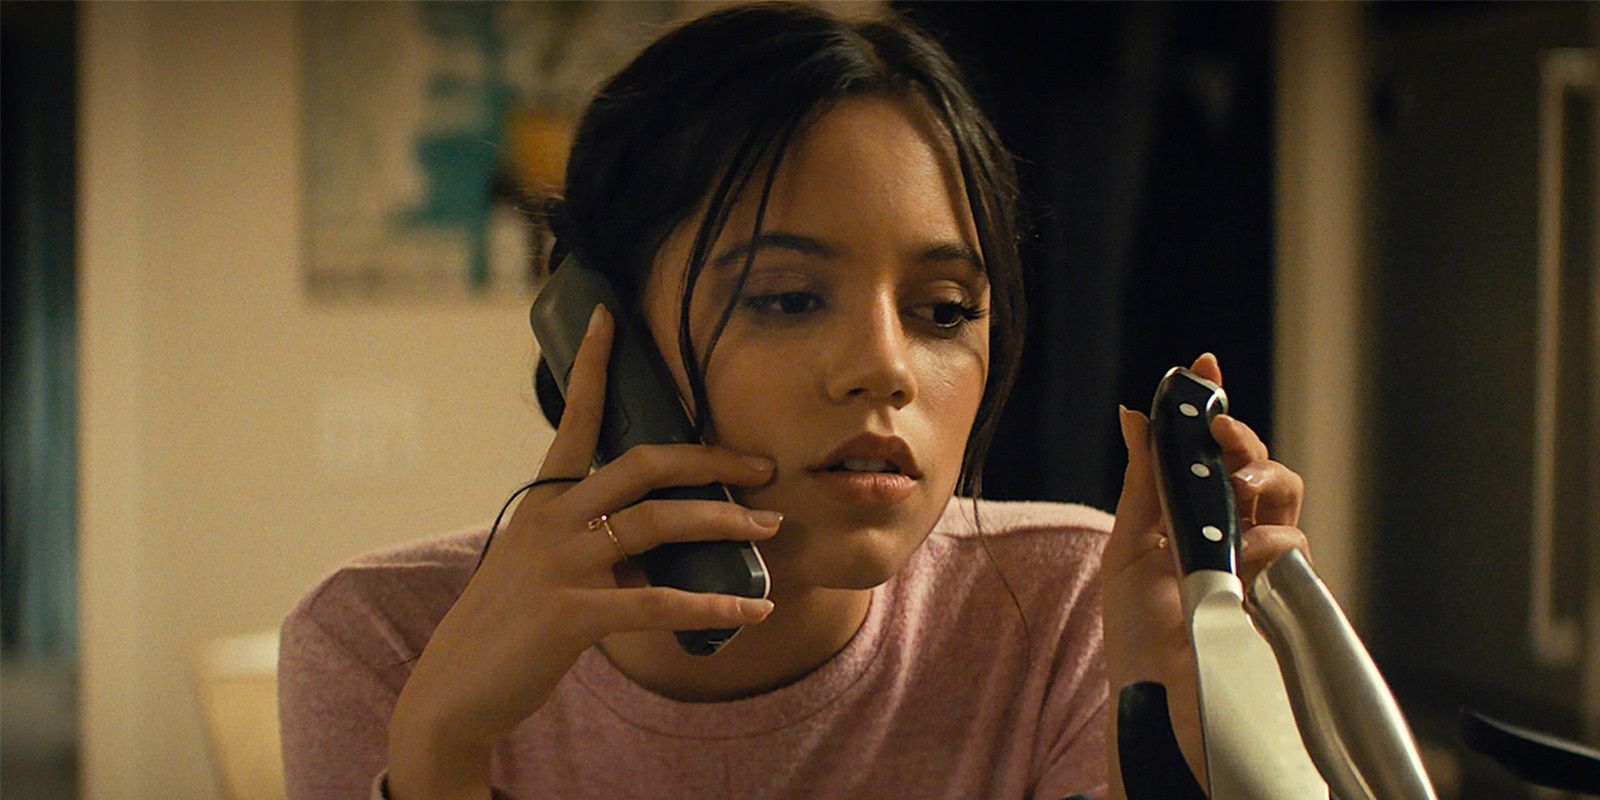 Jenna Ortega on the phone in Scream